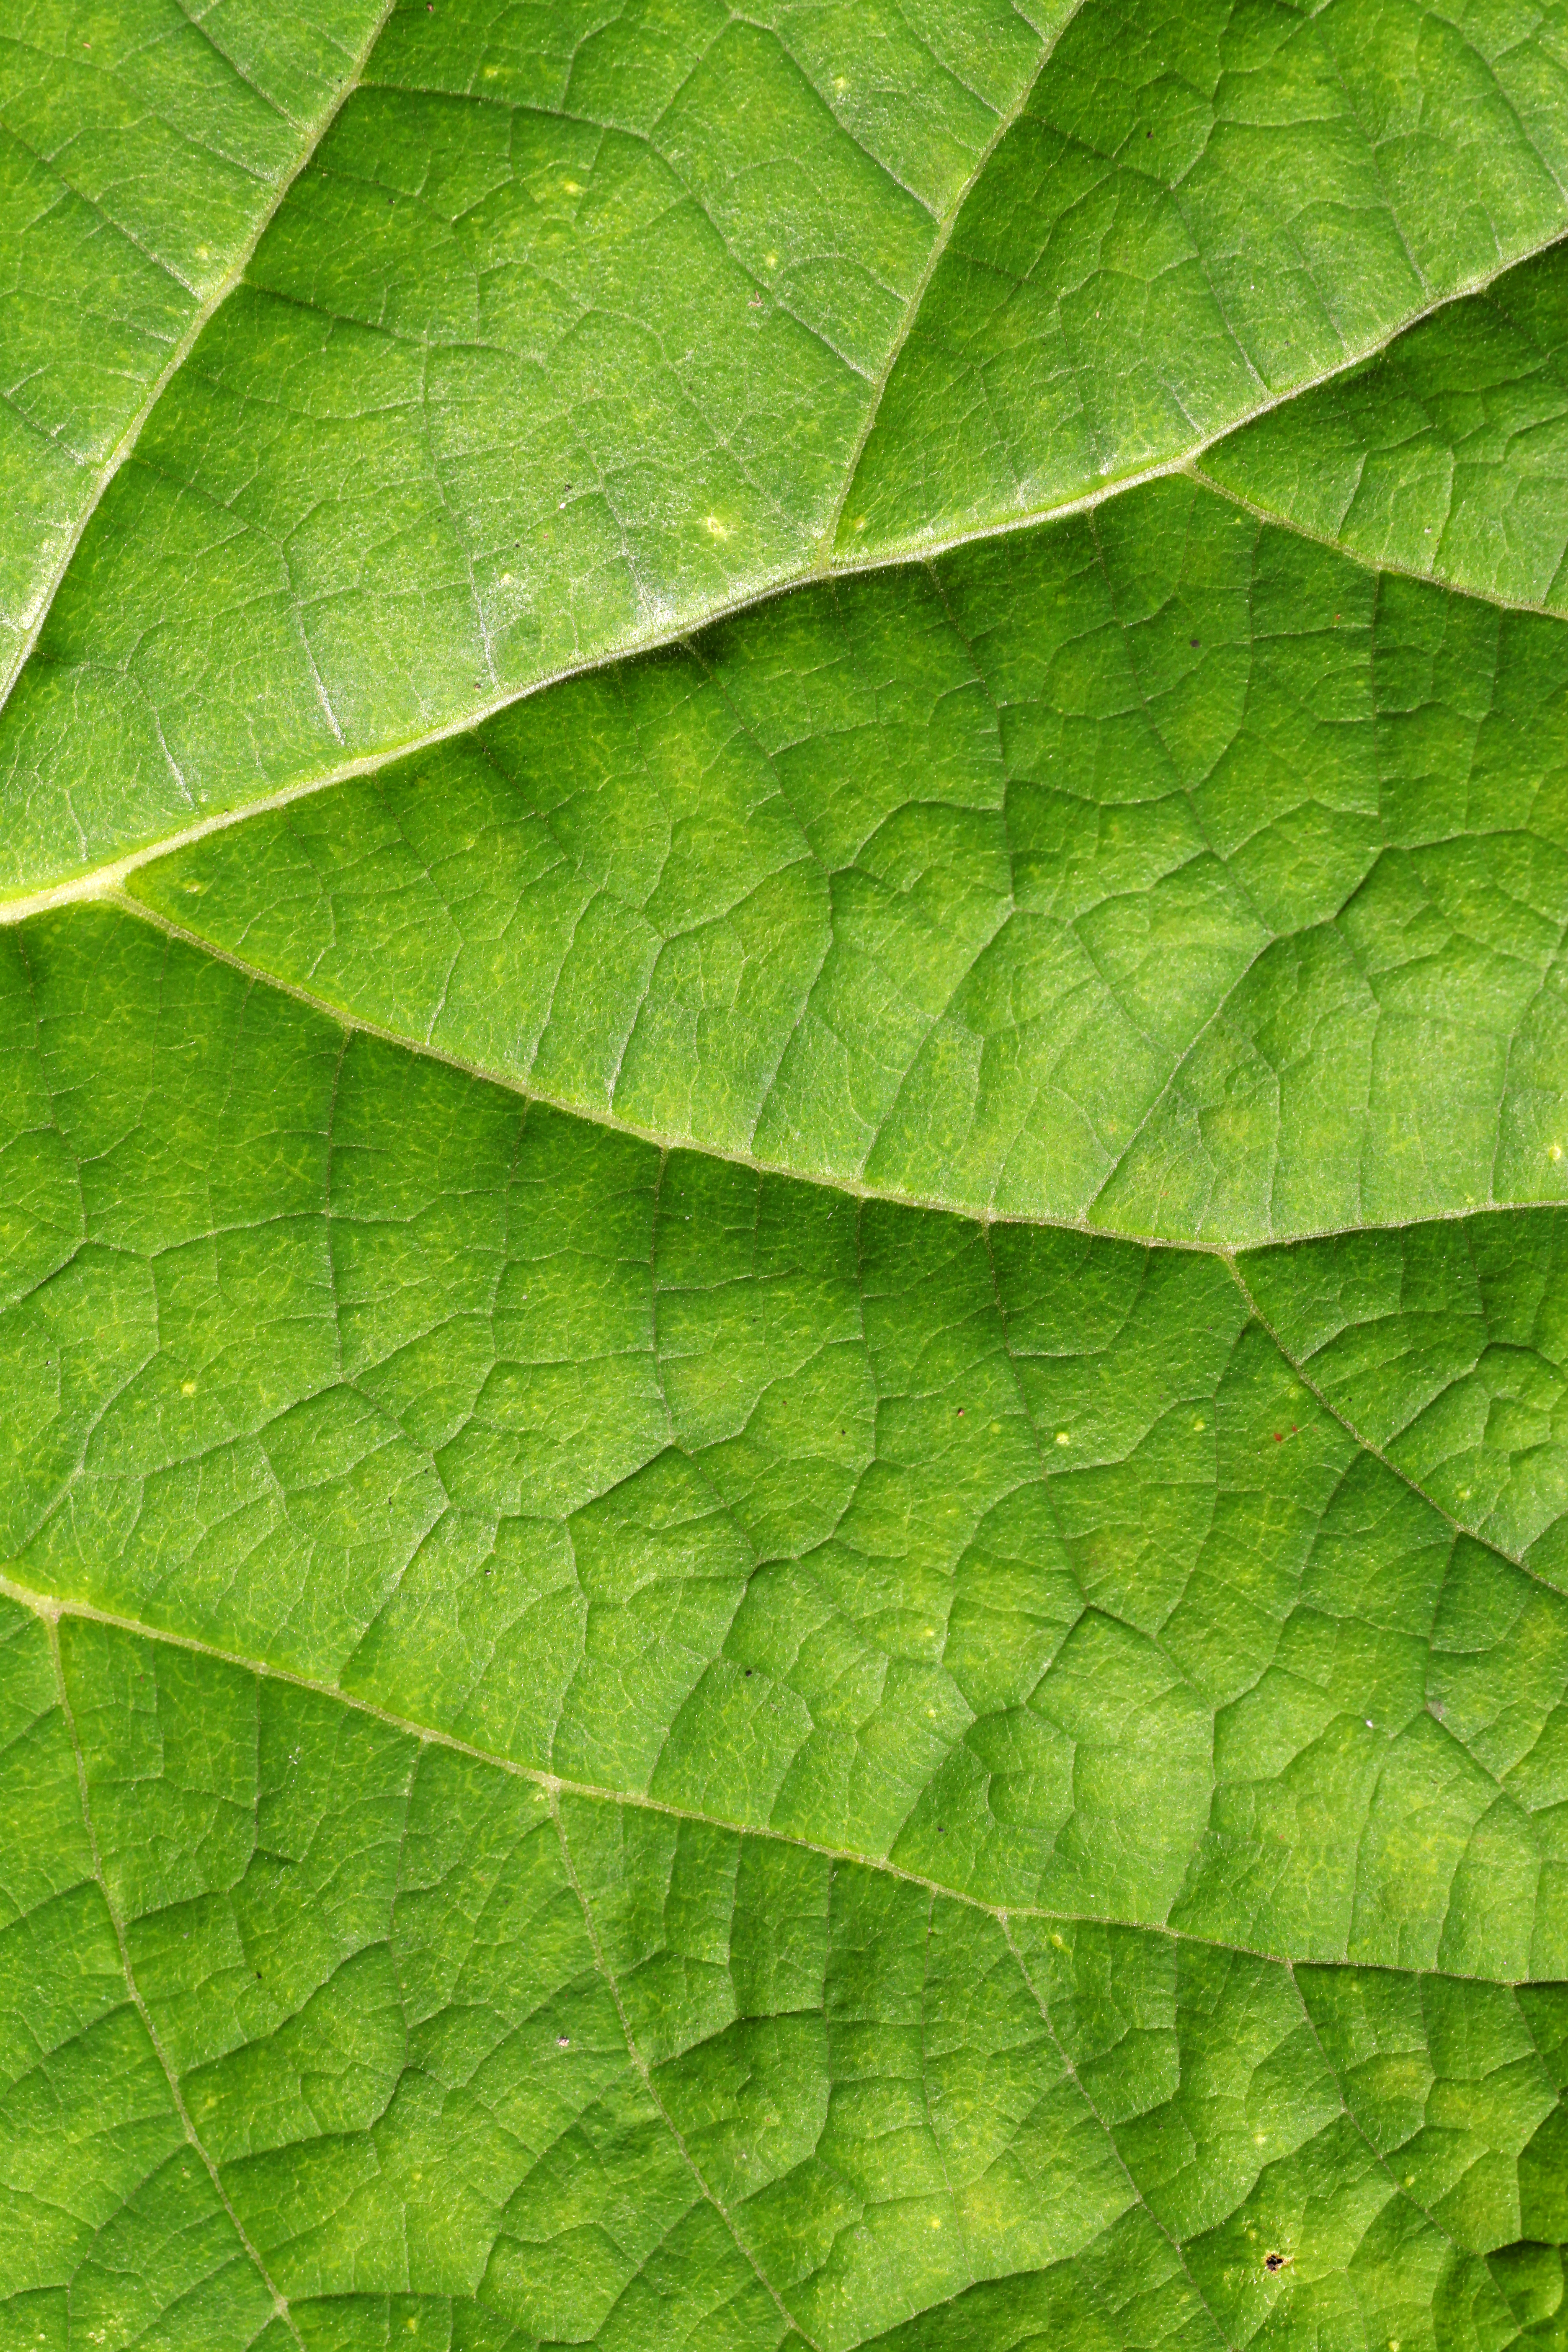 Green Leaf Texture - Free Stock Photo by Janaka Dharmasena on ...